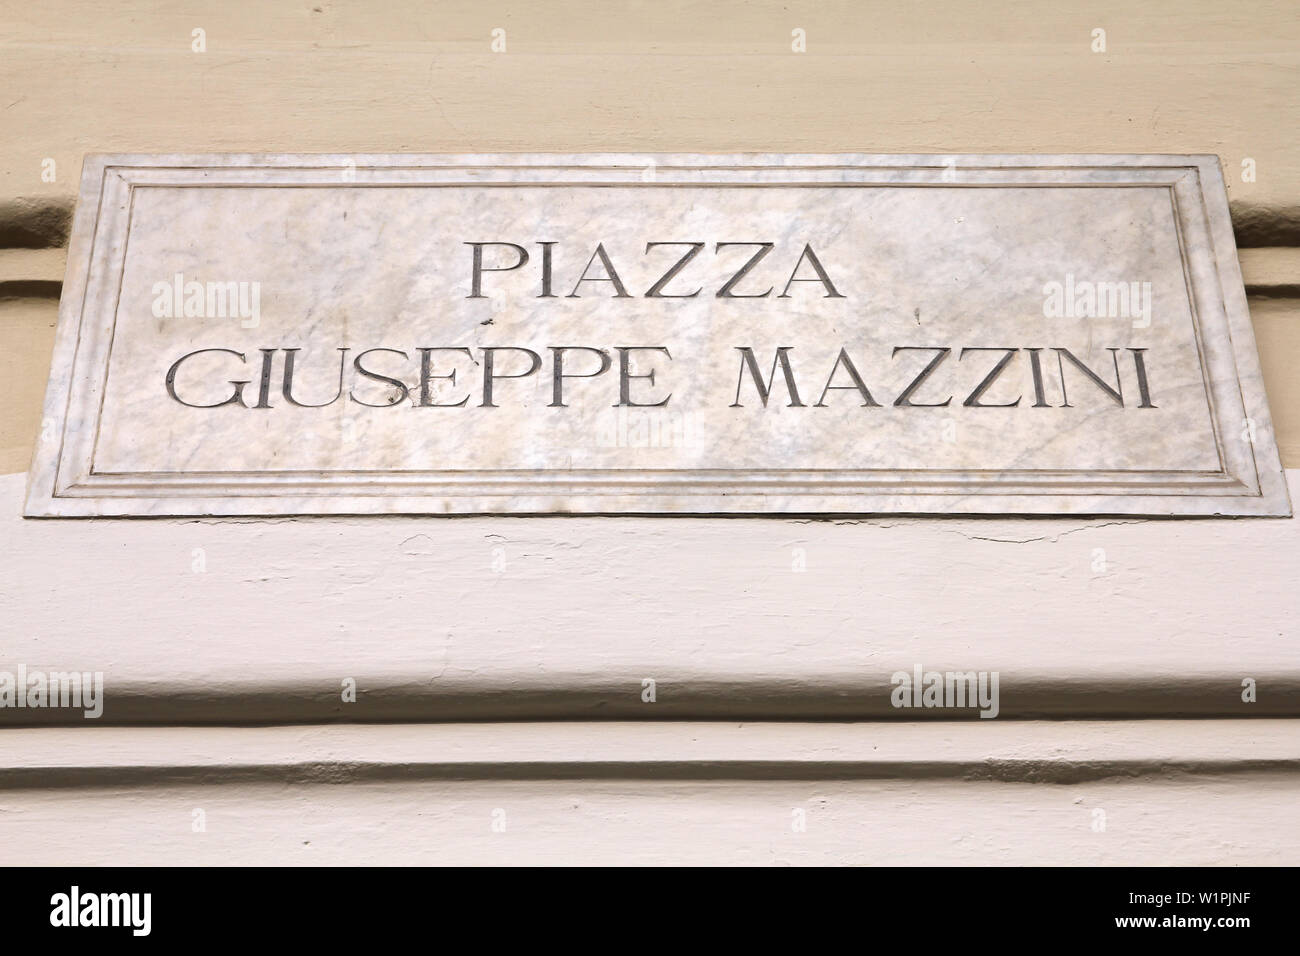 Modena, Italy - Emilia-Romagna region. Square name sign - Piazza Giuseppe Mazzini. Stock Photo